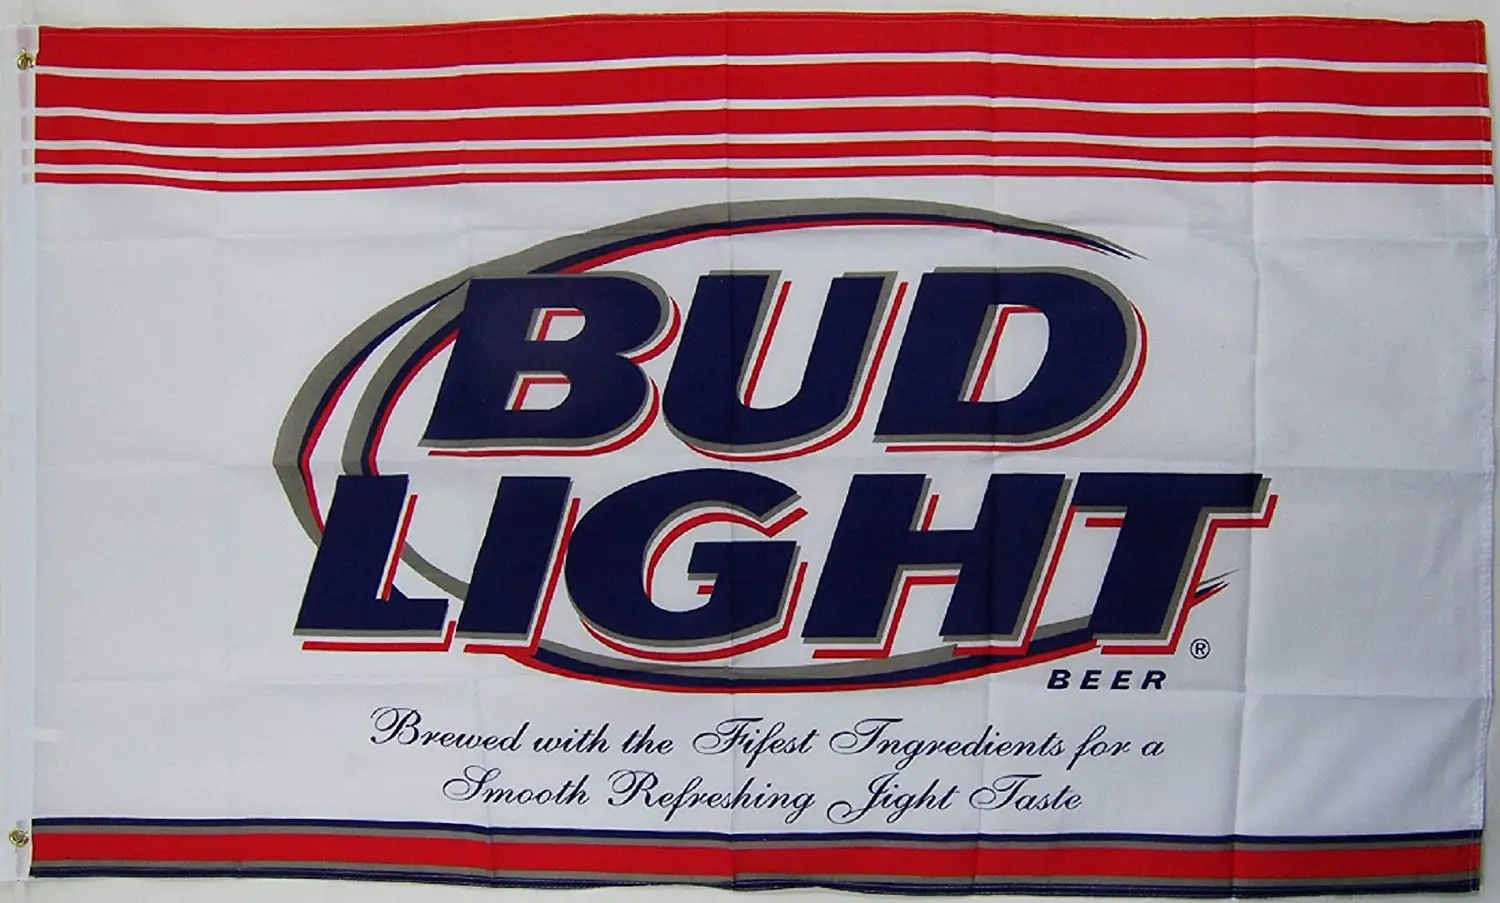 Budweiser Beer Promotion Advertising Flag Banner 3x5 Feet US Shipper 